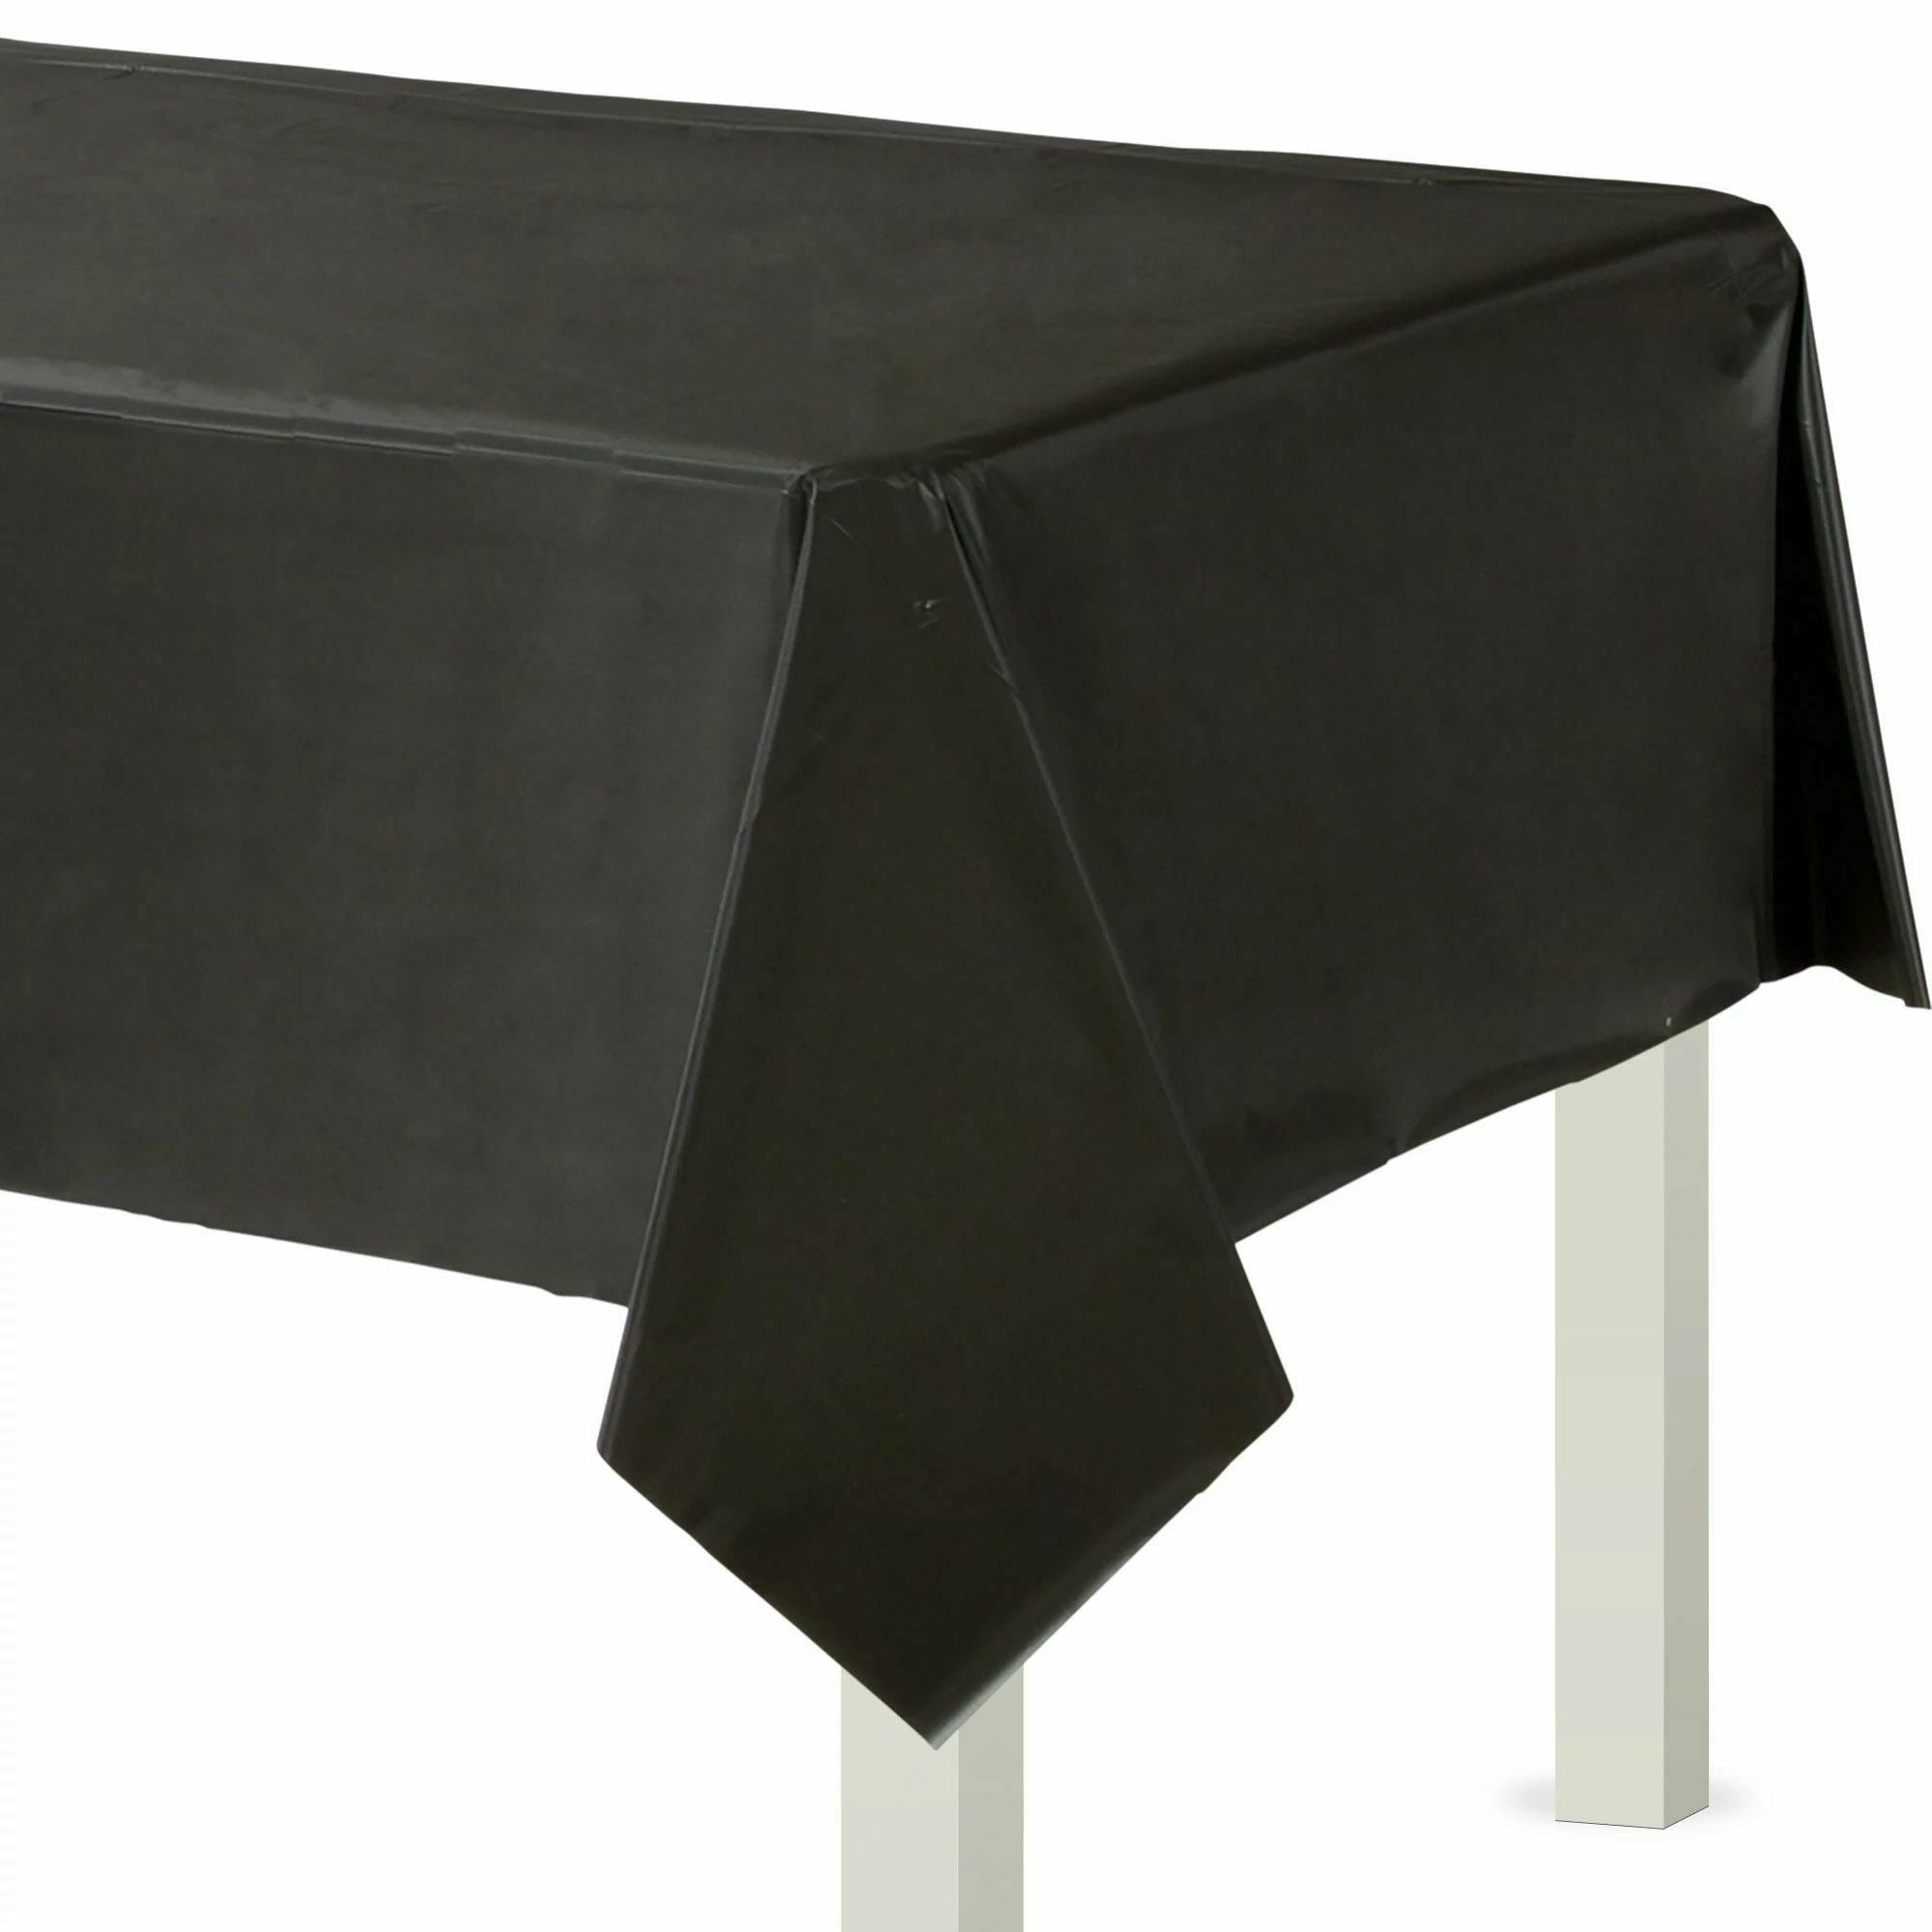 Amscan BASIC Jet Black - Flannel Backed Table Cover